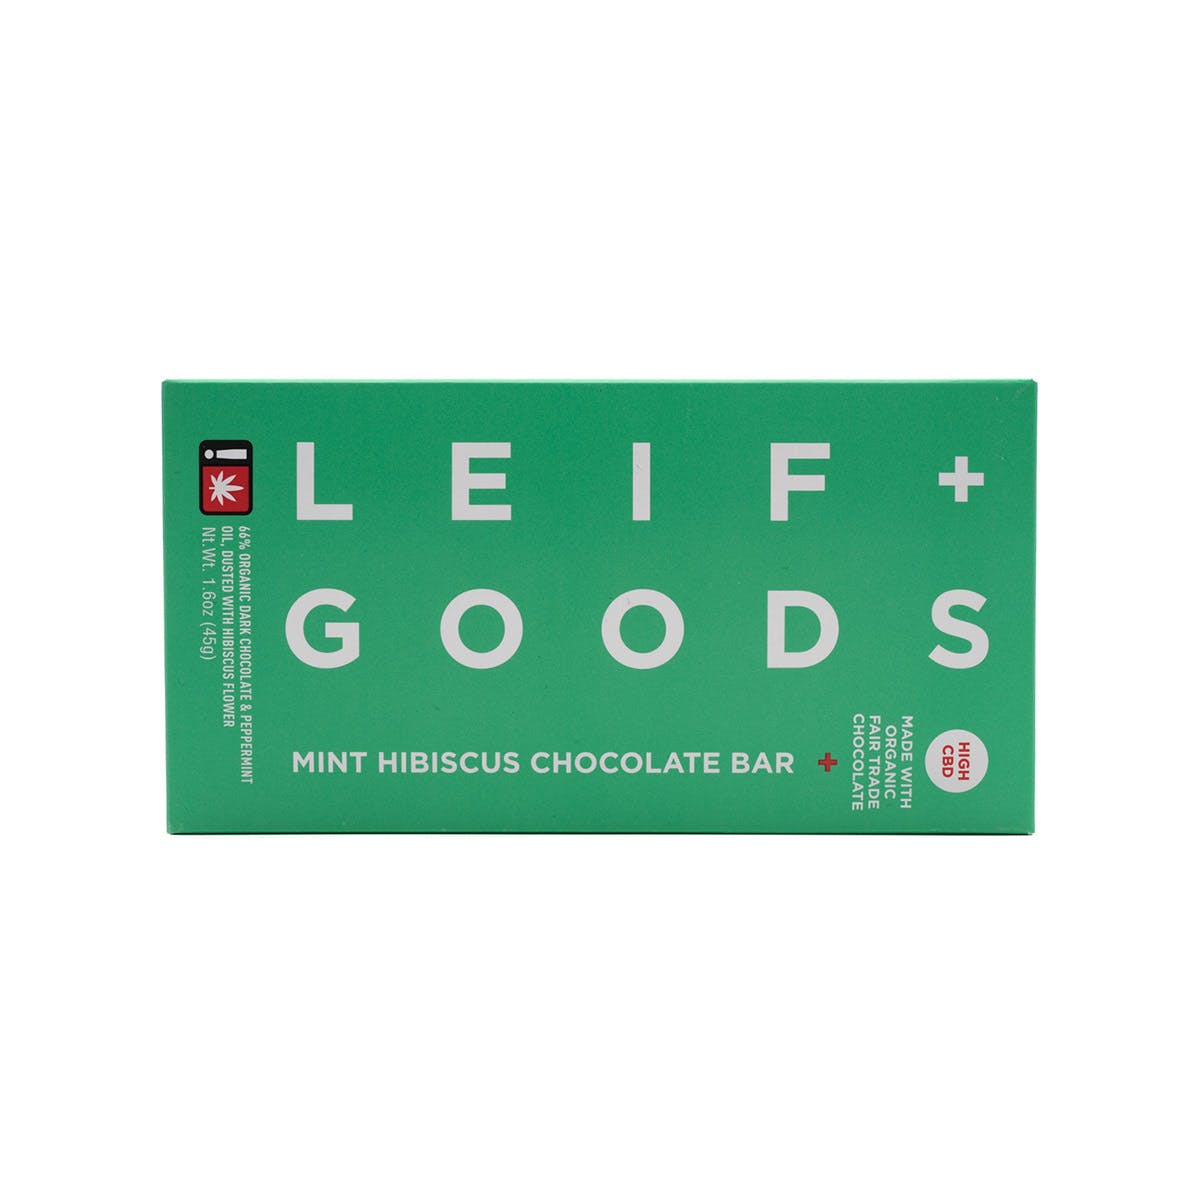 edible-leif-goods-mint-hibiscus-chocolate-bar-11